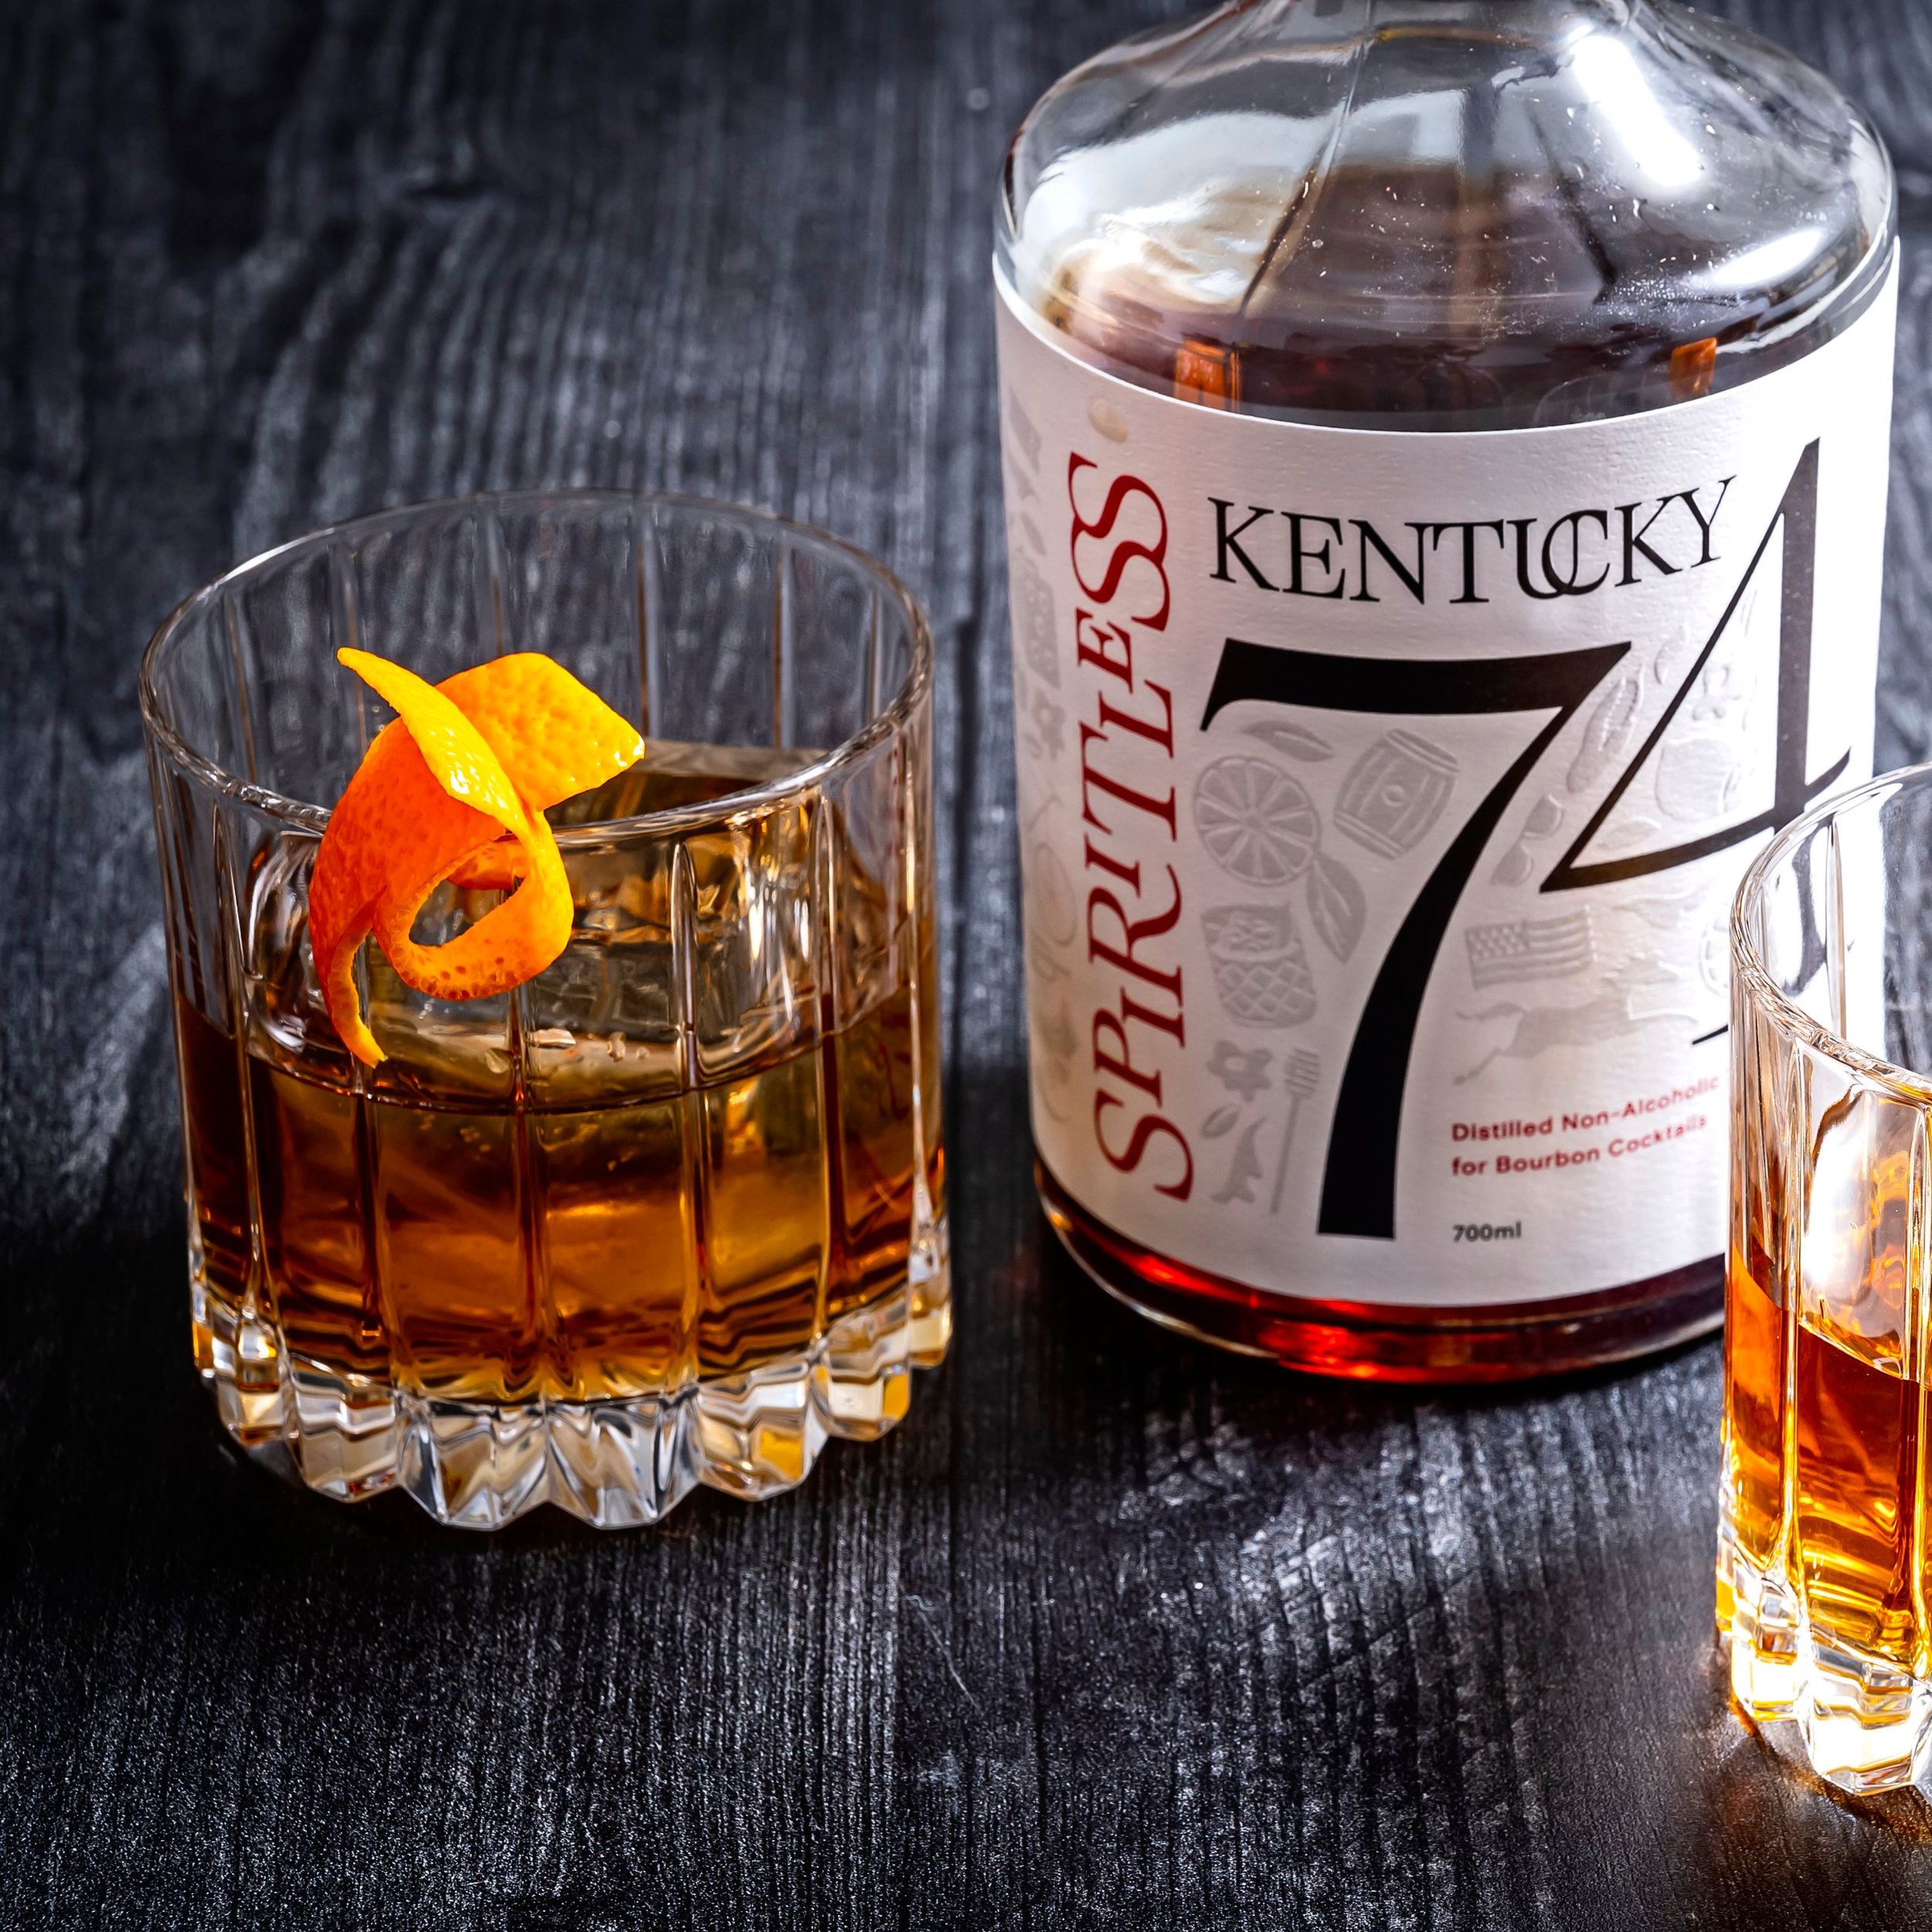 Non-Alcoholic Bourbon Whiskey, Kentucky 74 - 700ml